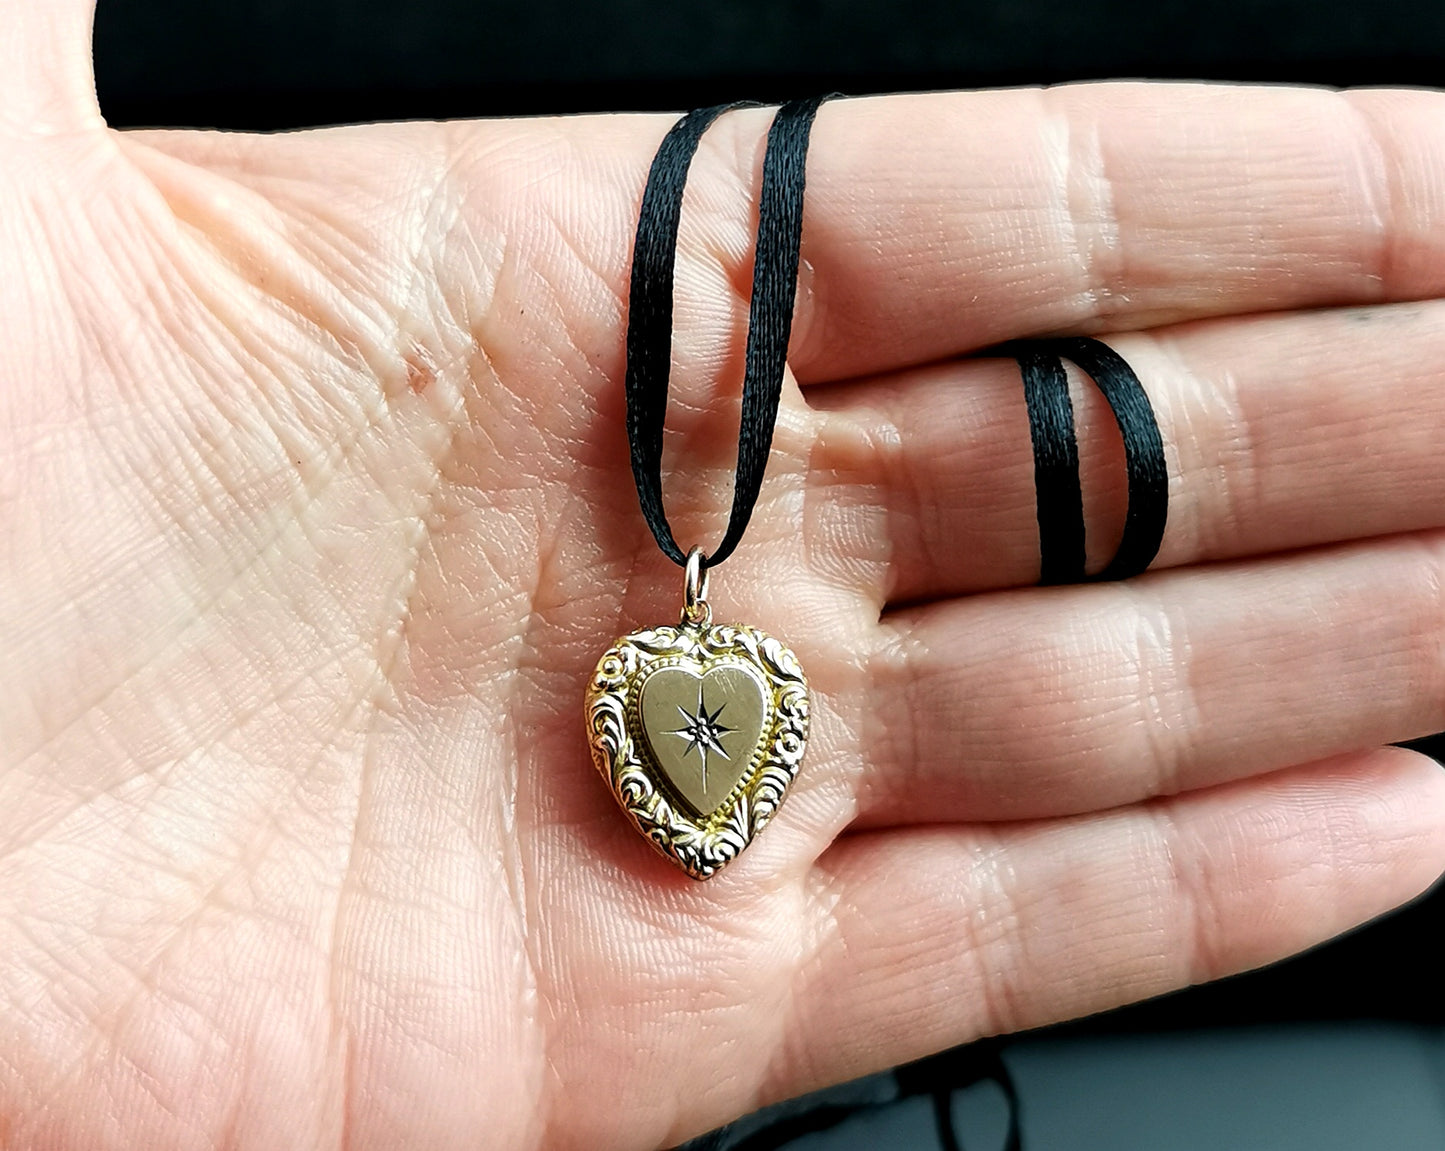 Antique Diamond heart locket, 9ct gold, pendant